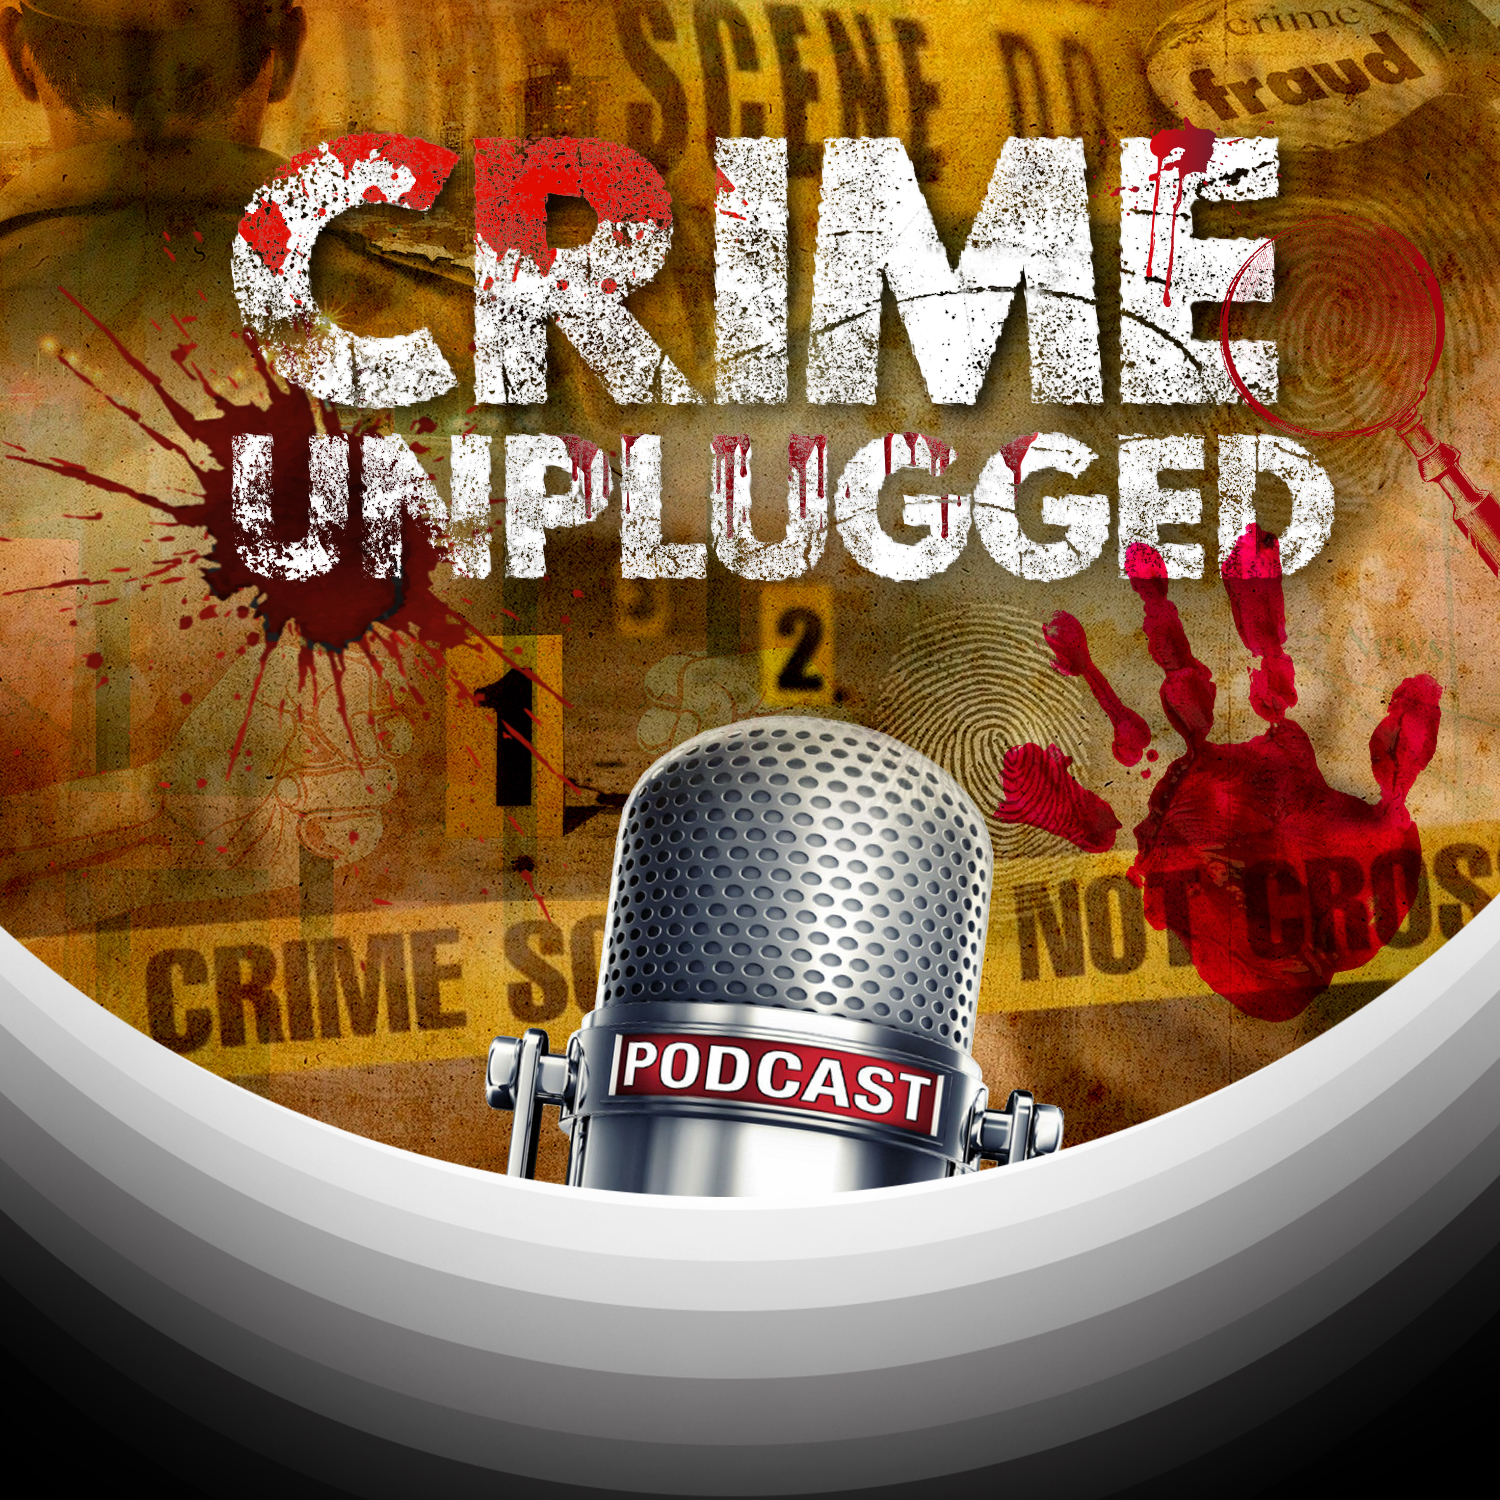 खरी कहाणी लखोबा लोखंडेची… | True Story Behind Marathi Drama To Mi Navech | Crime Unplugged (Marathi Crime Podcast)